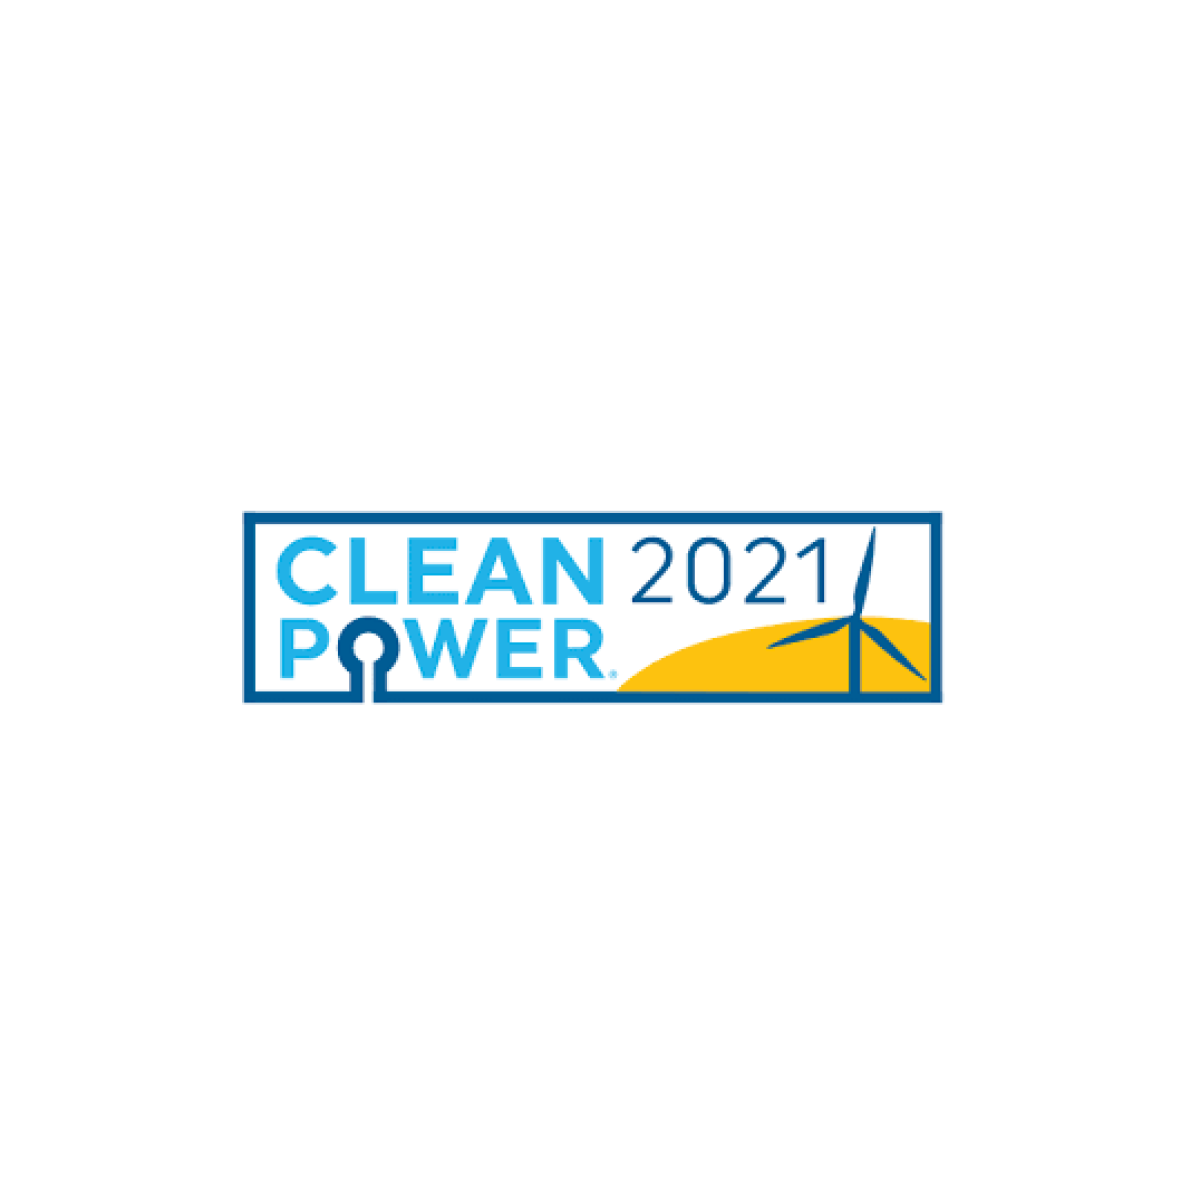 Amara NZero participates in the ACP Cleanpower 2021 show